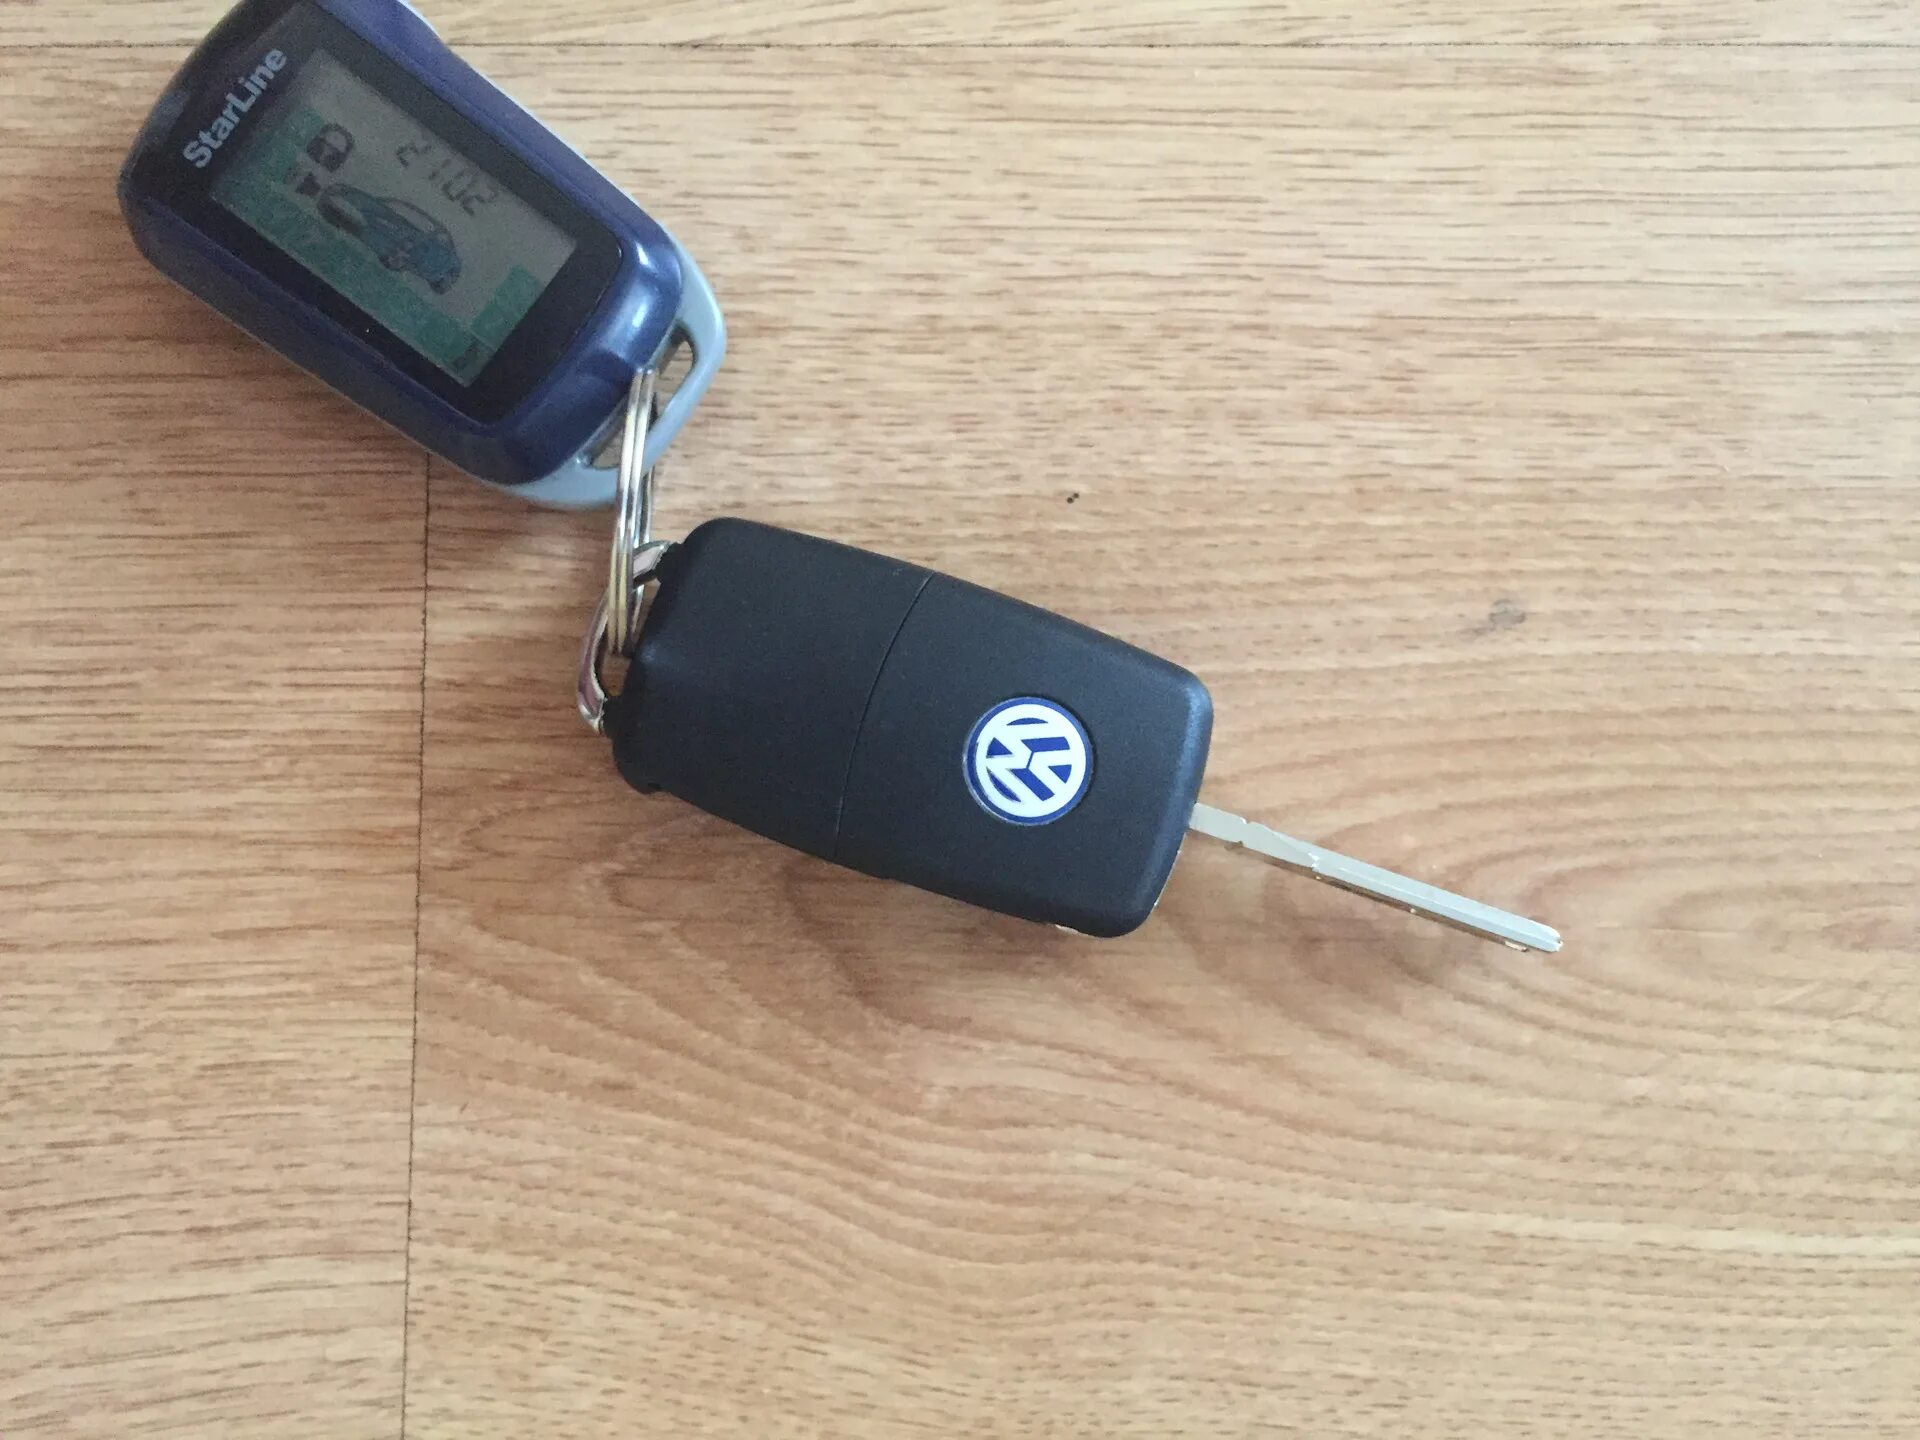 Ключи volkswagen polo. Выкидной ключ на поло седан. Выкидной ключ Volkswagen Polo. Ключ от Volkswagen Polo 2013. Ключ Volkswagen Polo не выкидной.